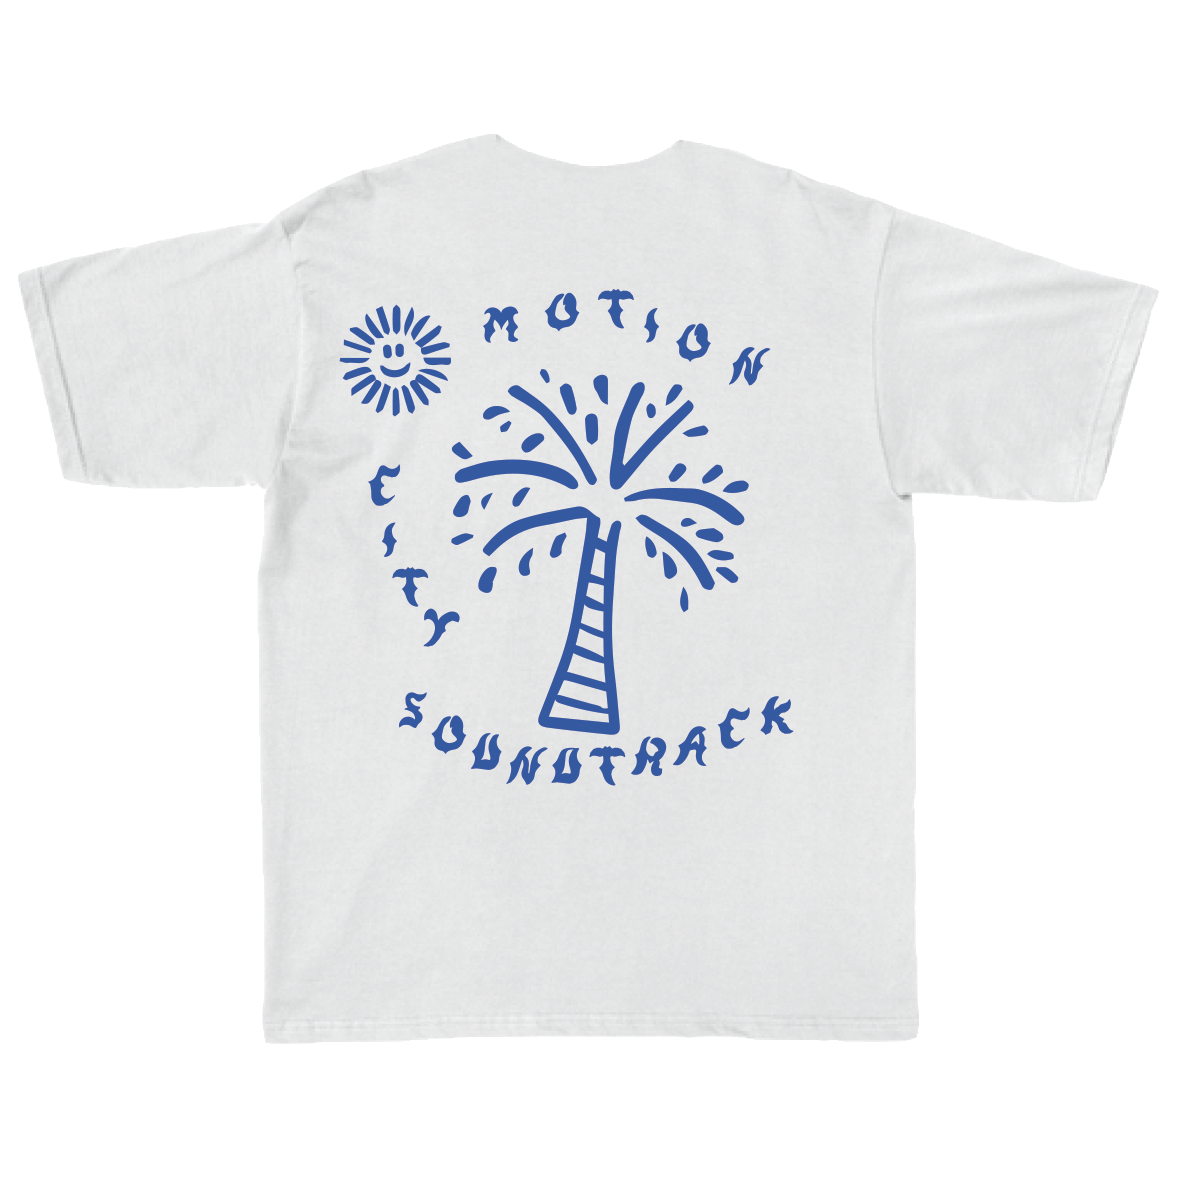 Palm Tree Tee - Motion City Soundtrack - T-Shirt